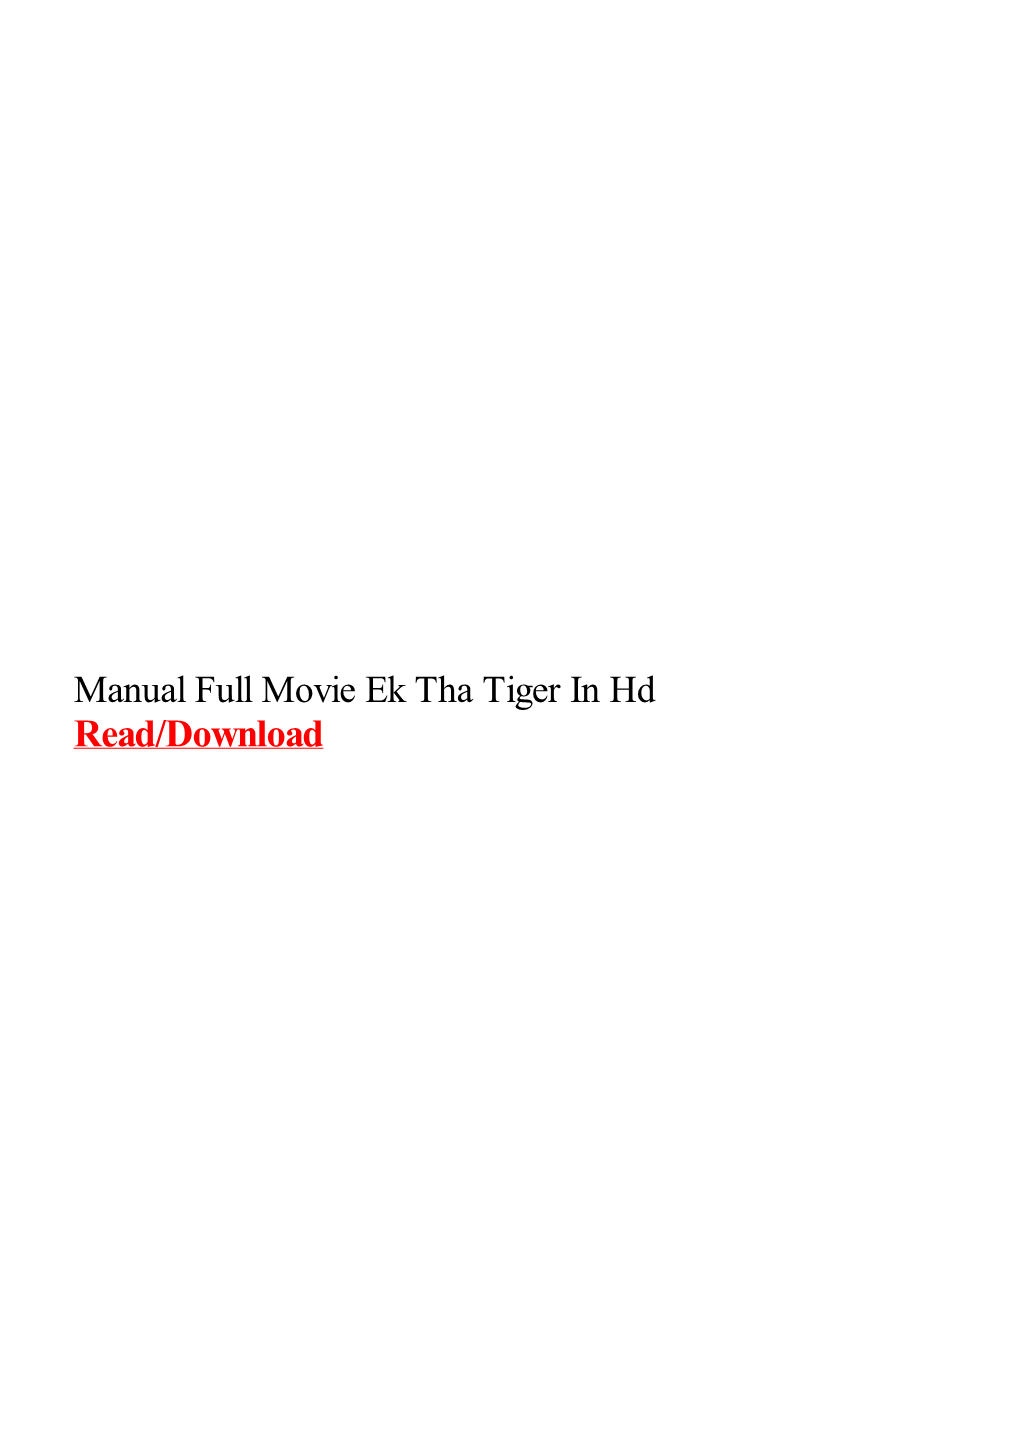 Manual Full Movie Ek Tha Tiger in Hd.Pdf